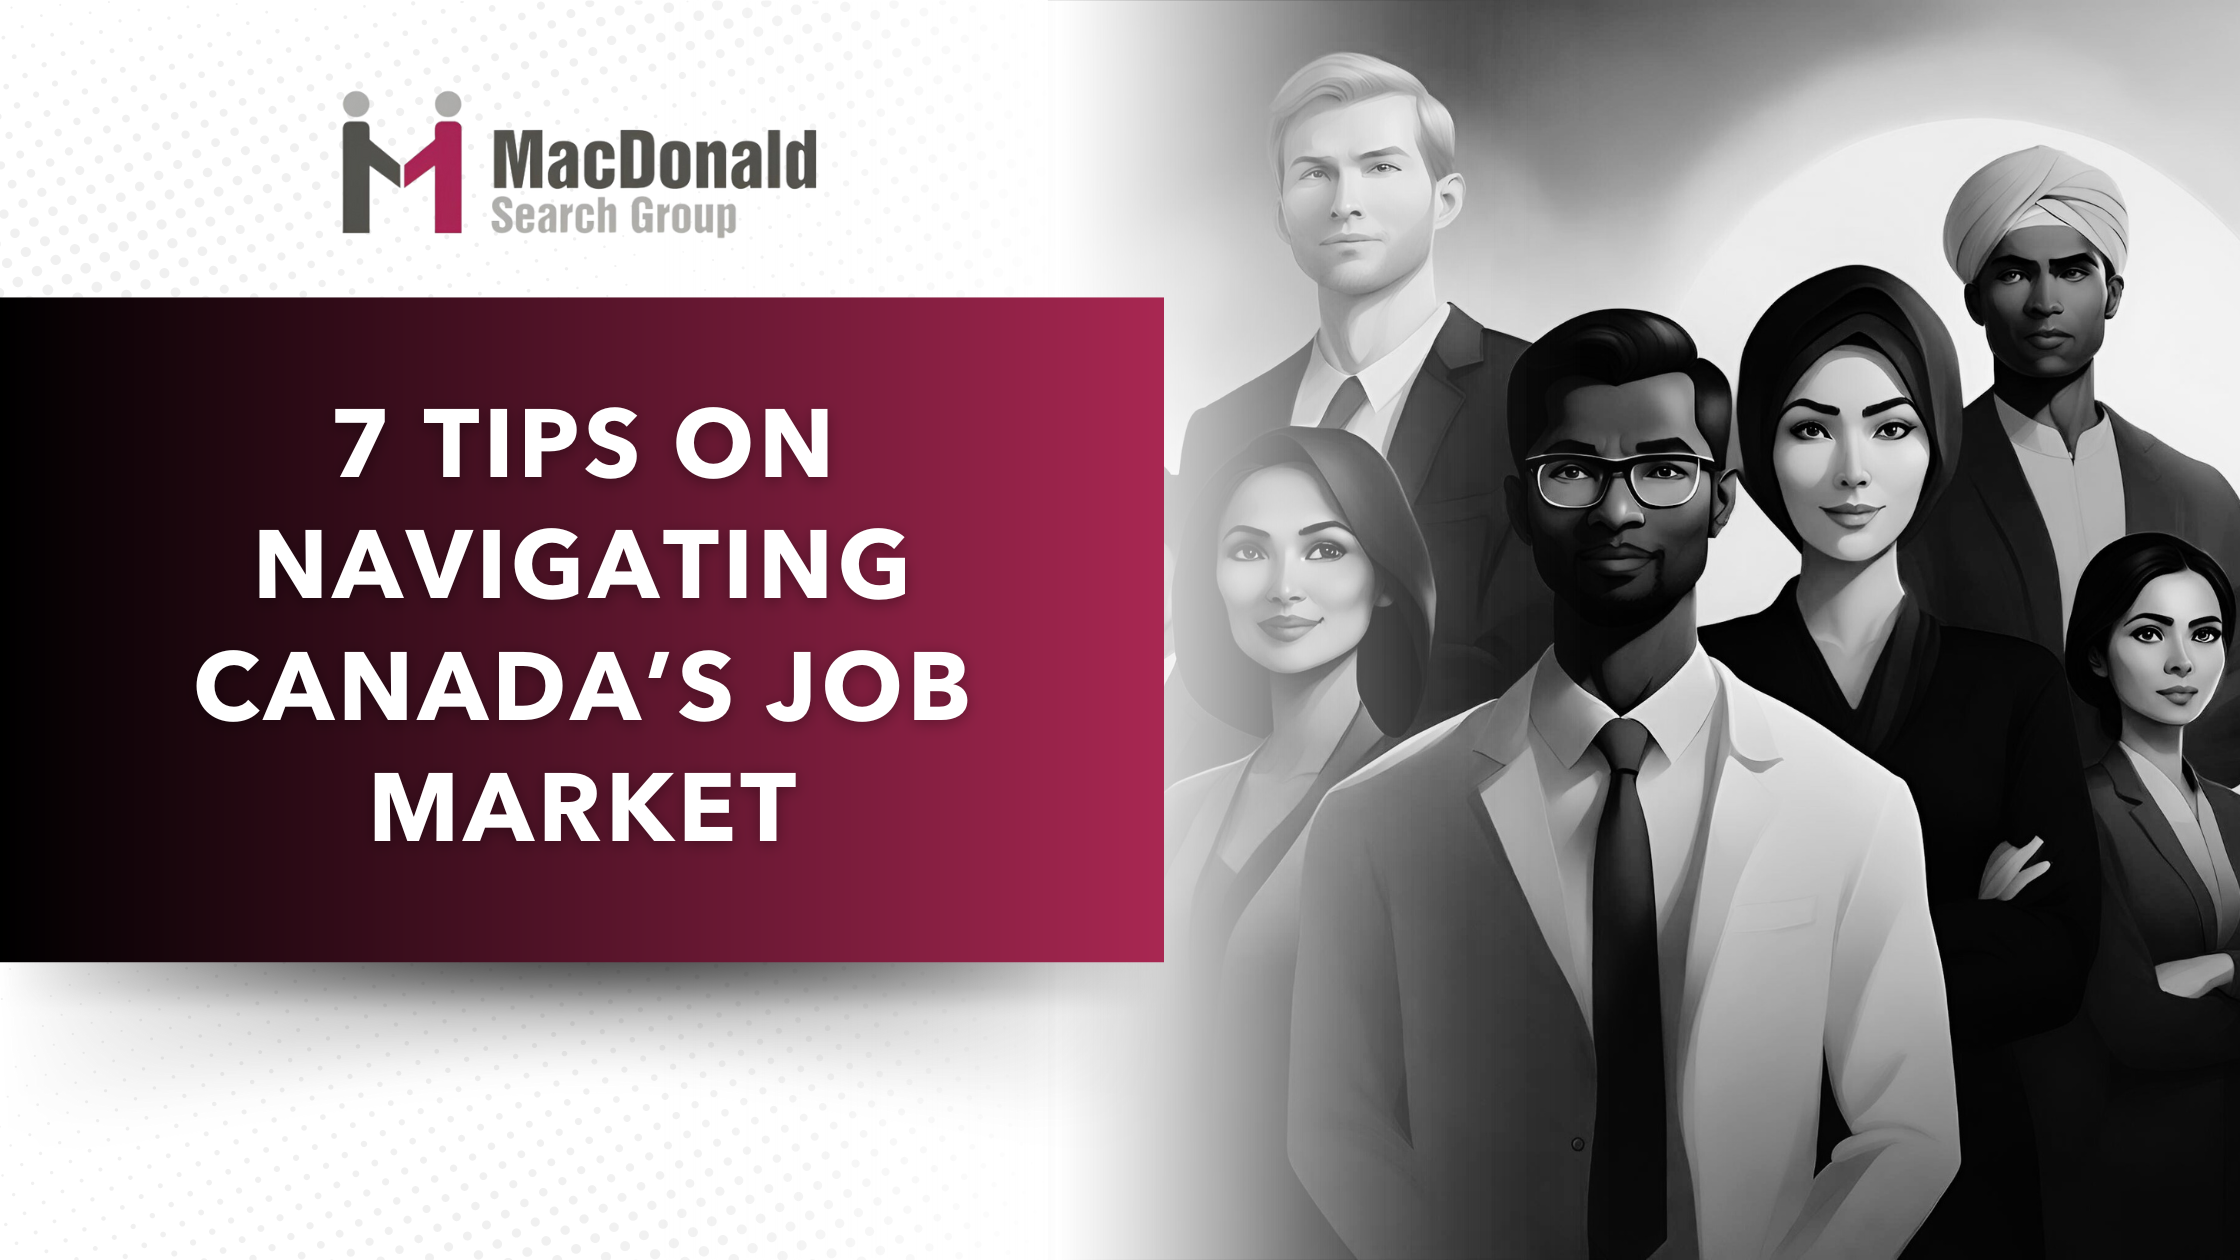 7 Tips on Navigating Canada’s Job Market